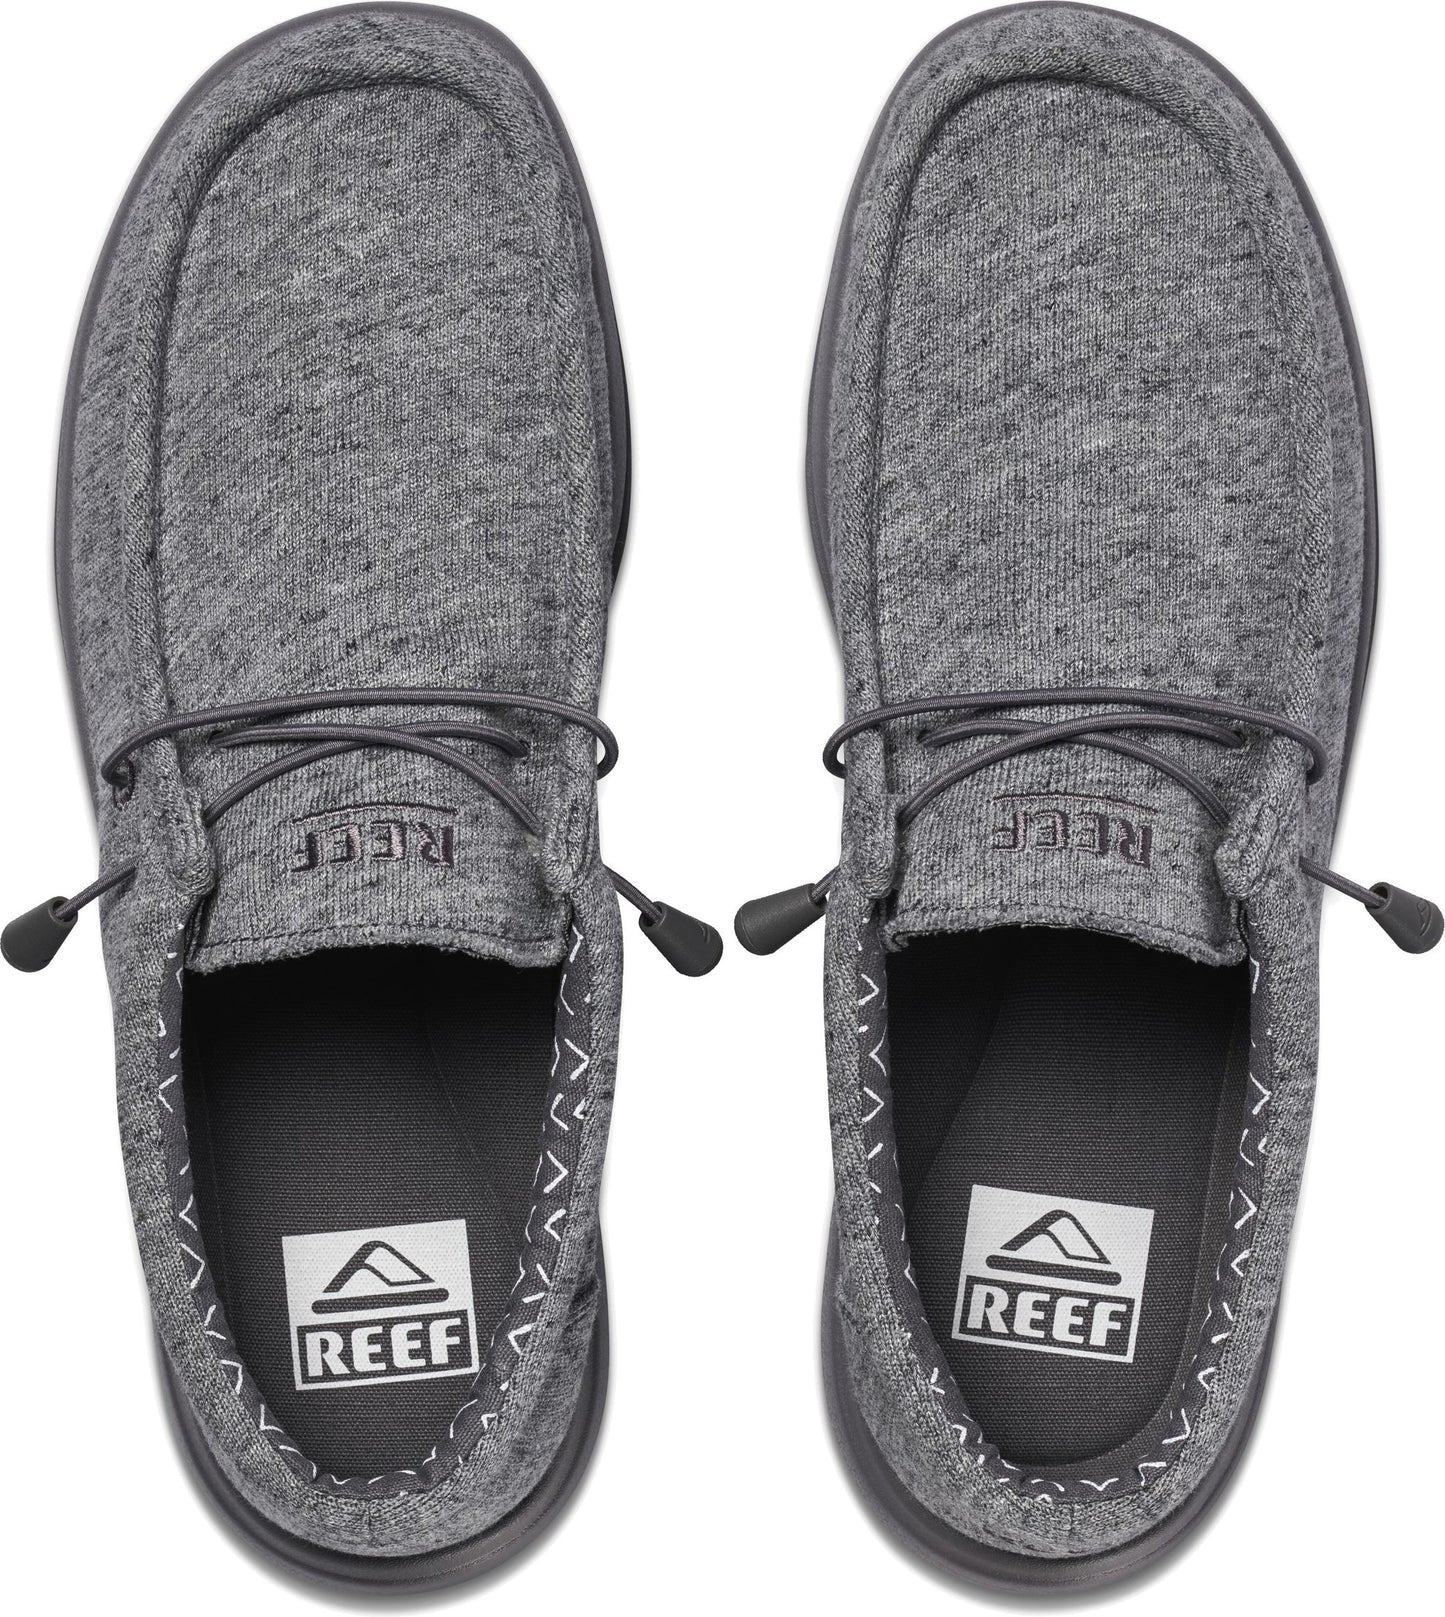 Reef Shoes Cushion Coast Light Grey